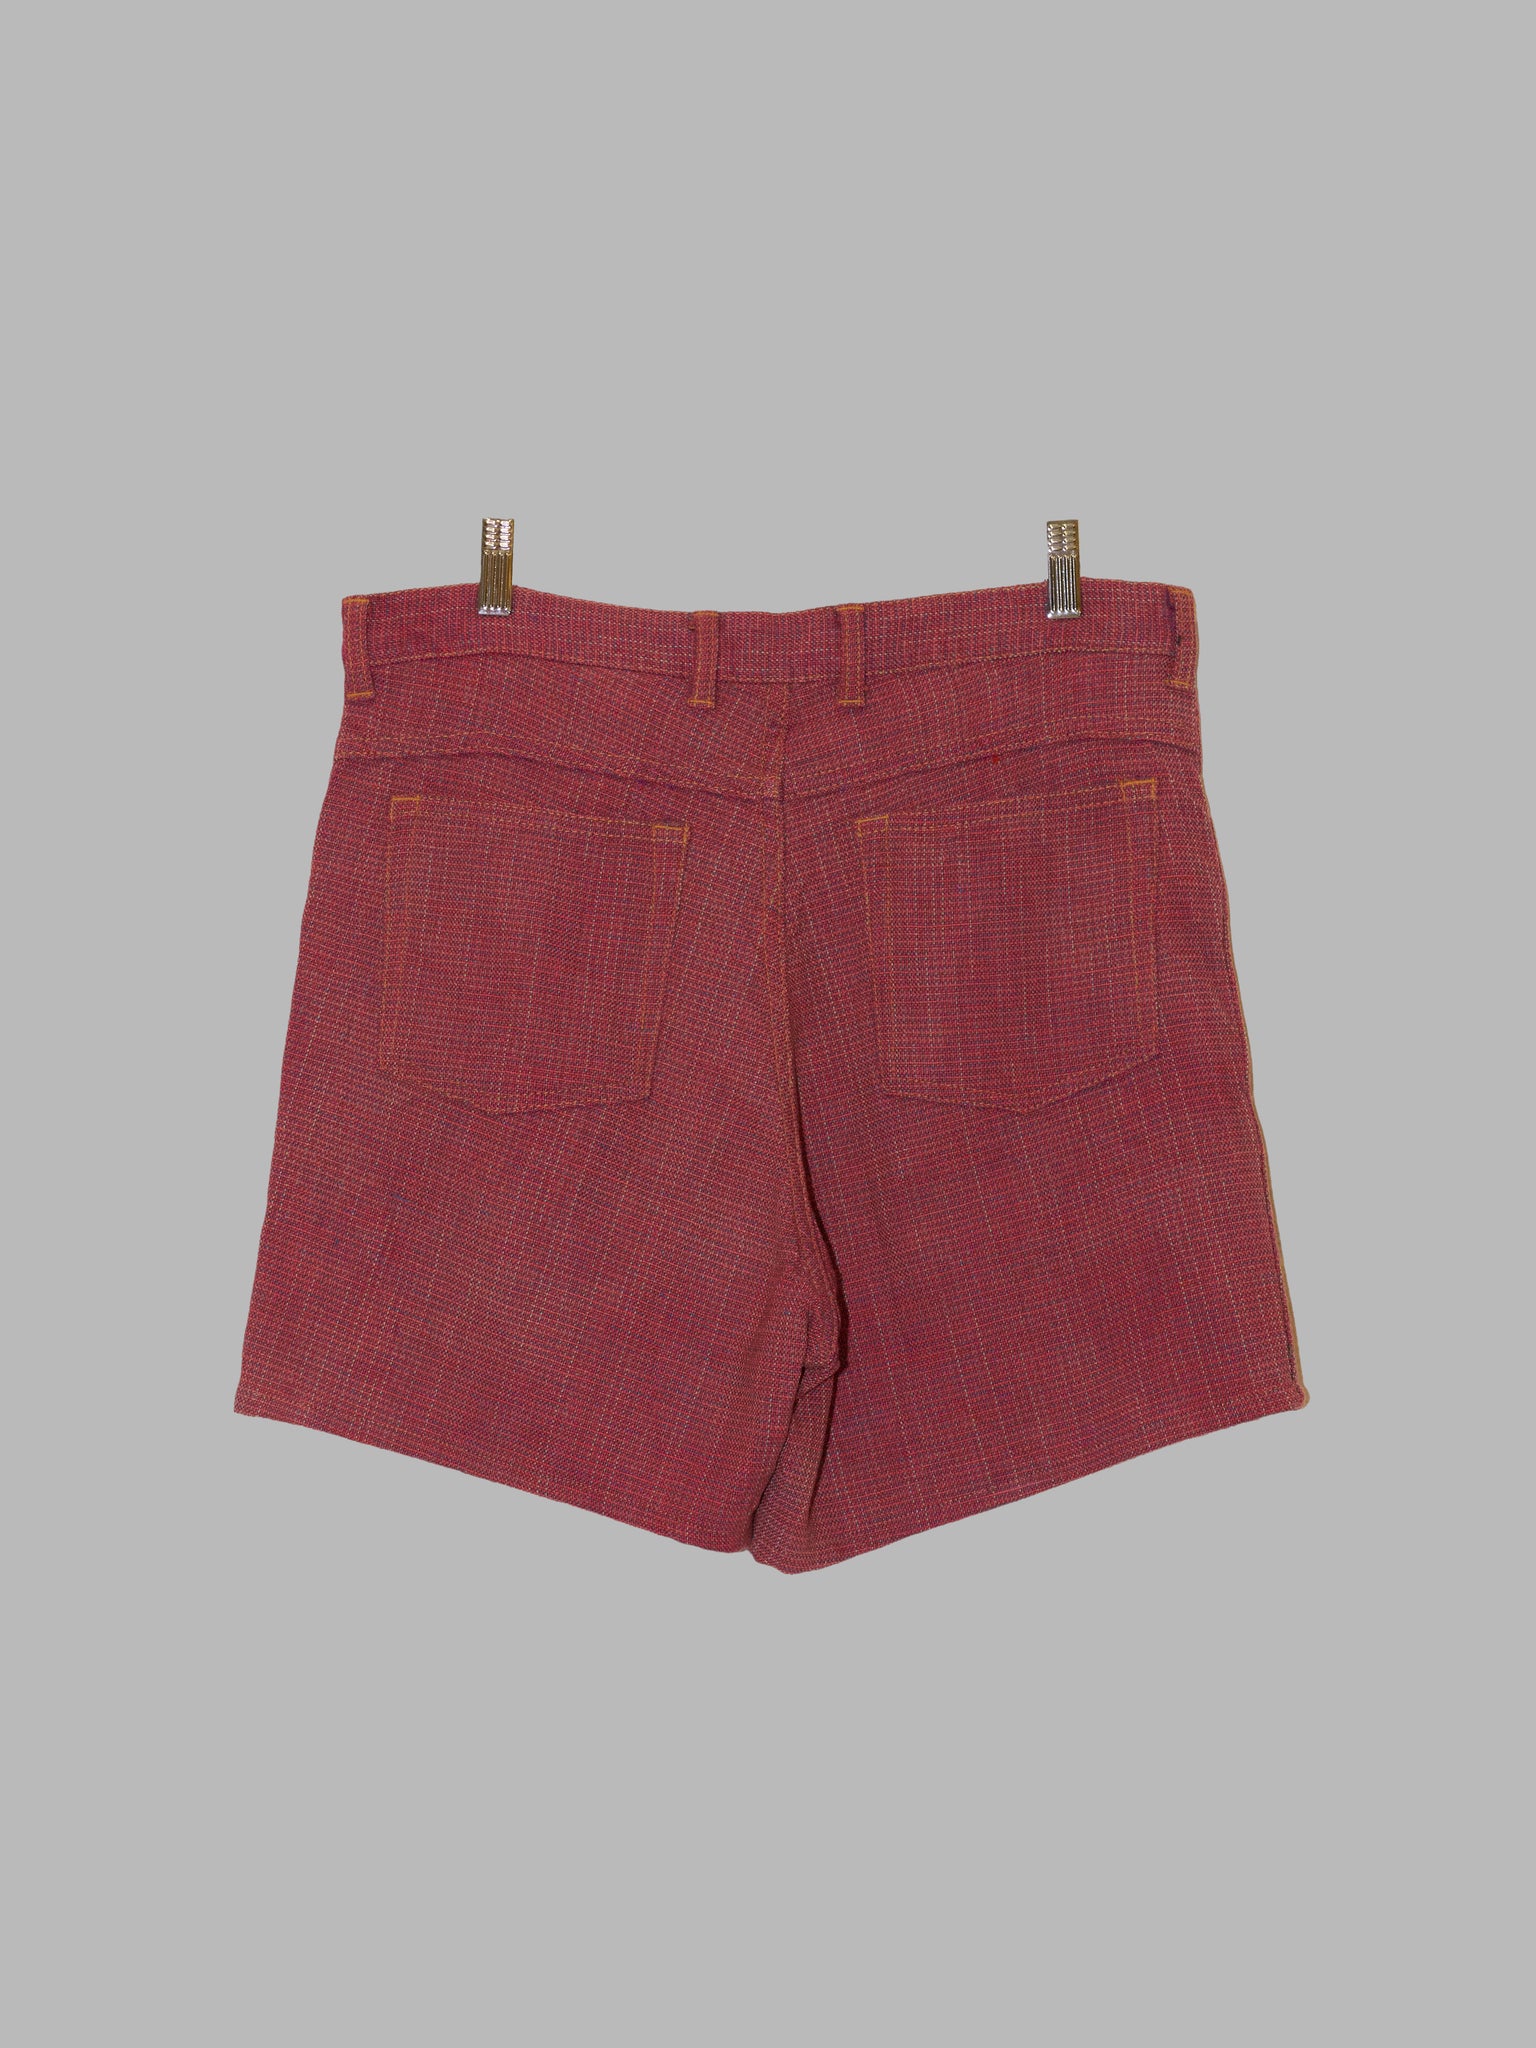 Junya Watanabe Comme des Garcons 2004 pink creased wool shorts - S